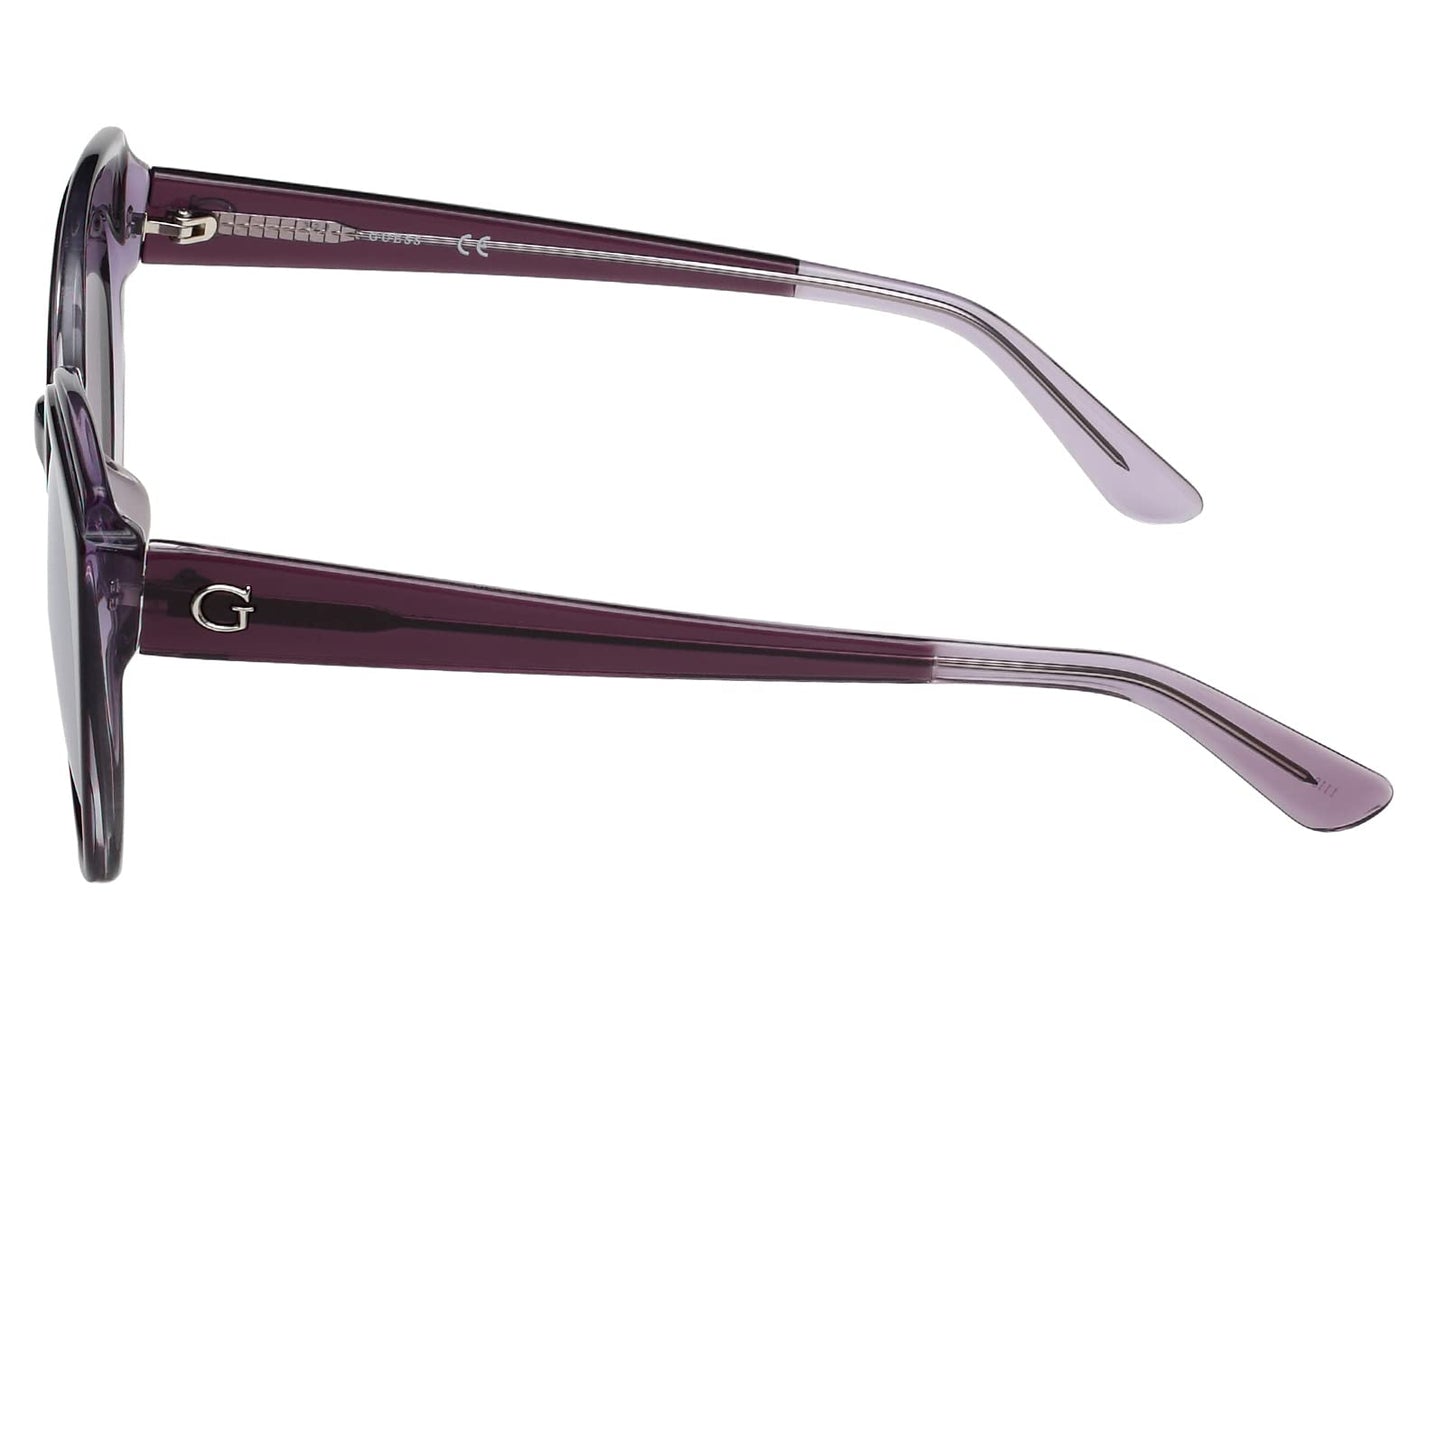 Guess Mirrored Cat-eye Women Sunglasses - (GU7591-F 83U 54 S |54| Purple Color Lens)